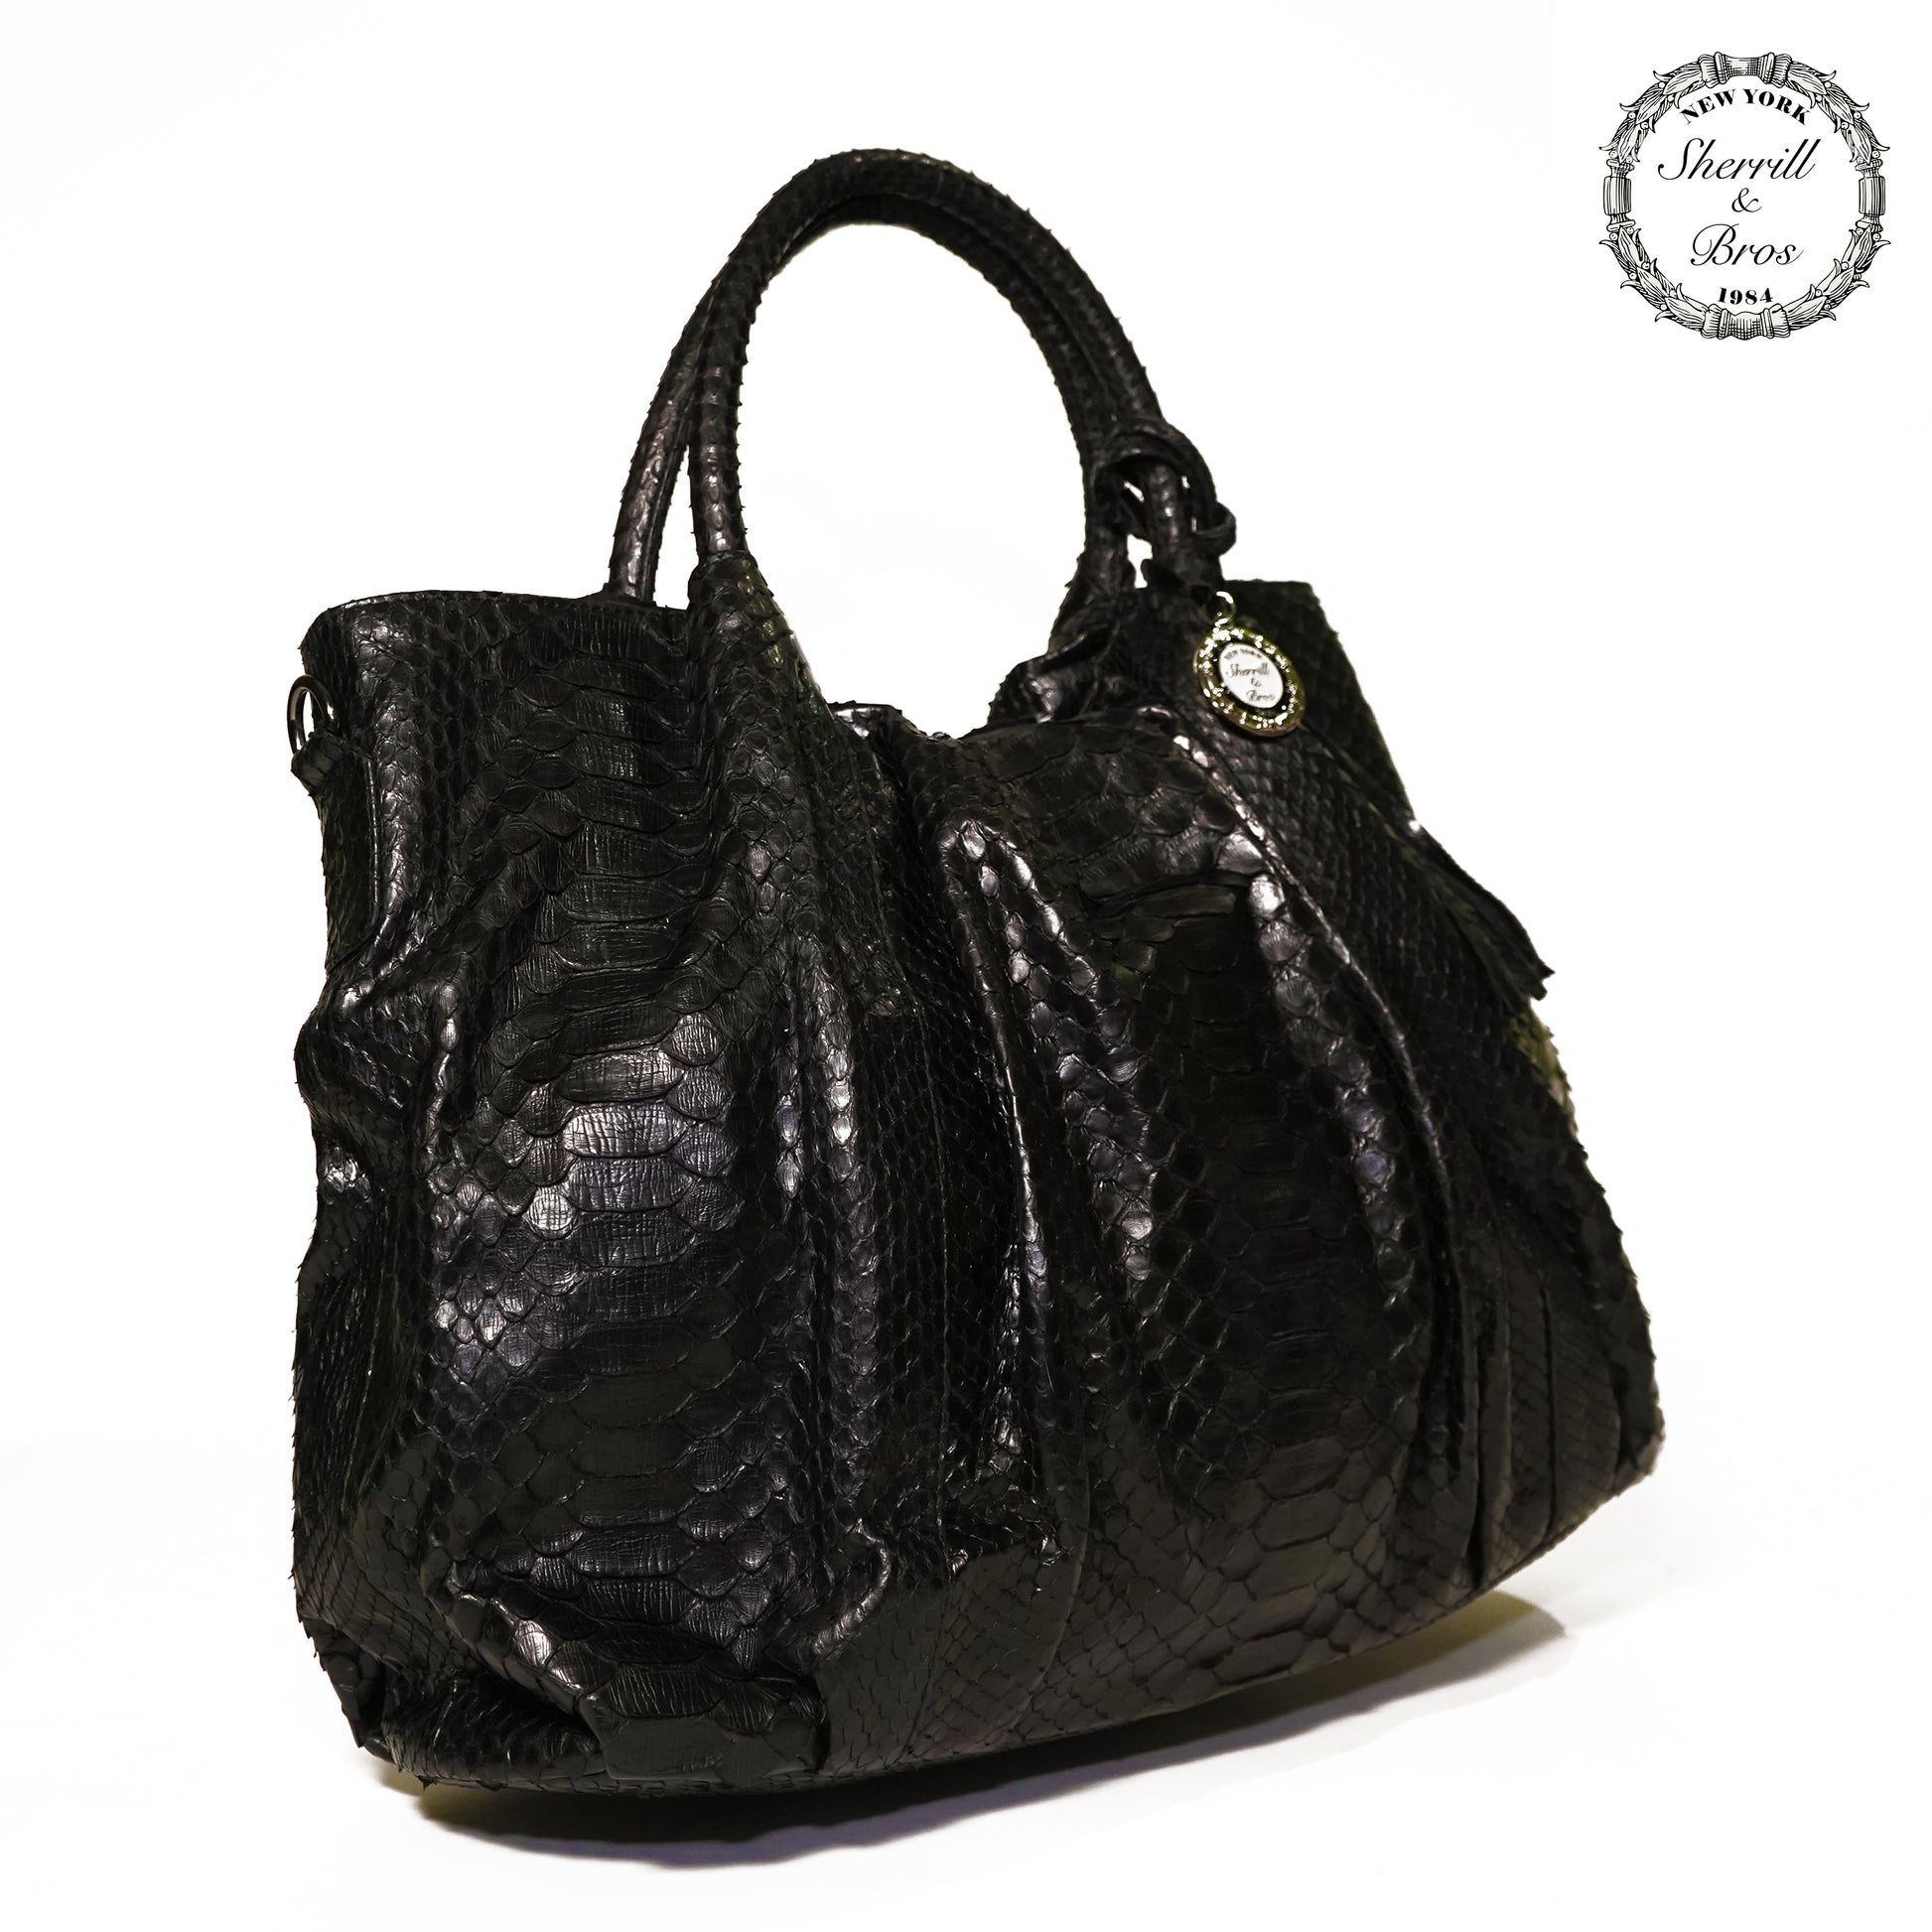 side view of black python skin handbag with handles 